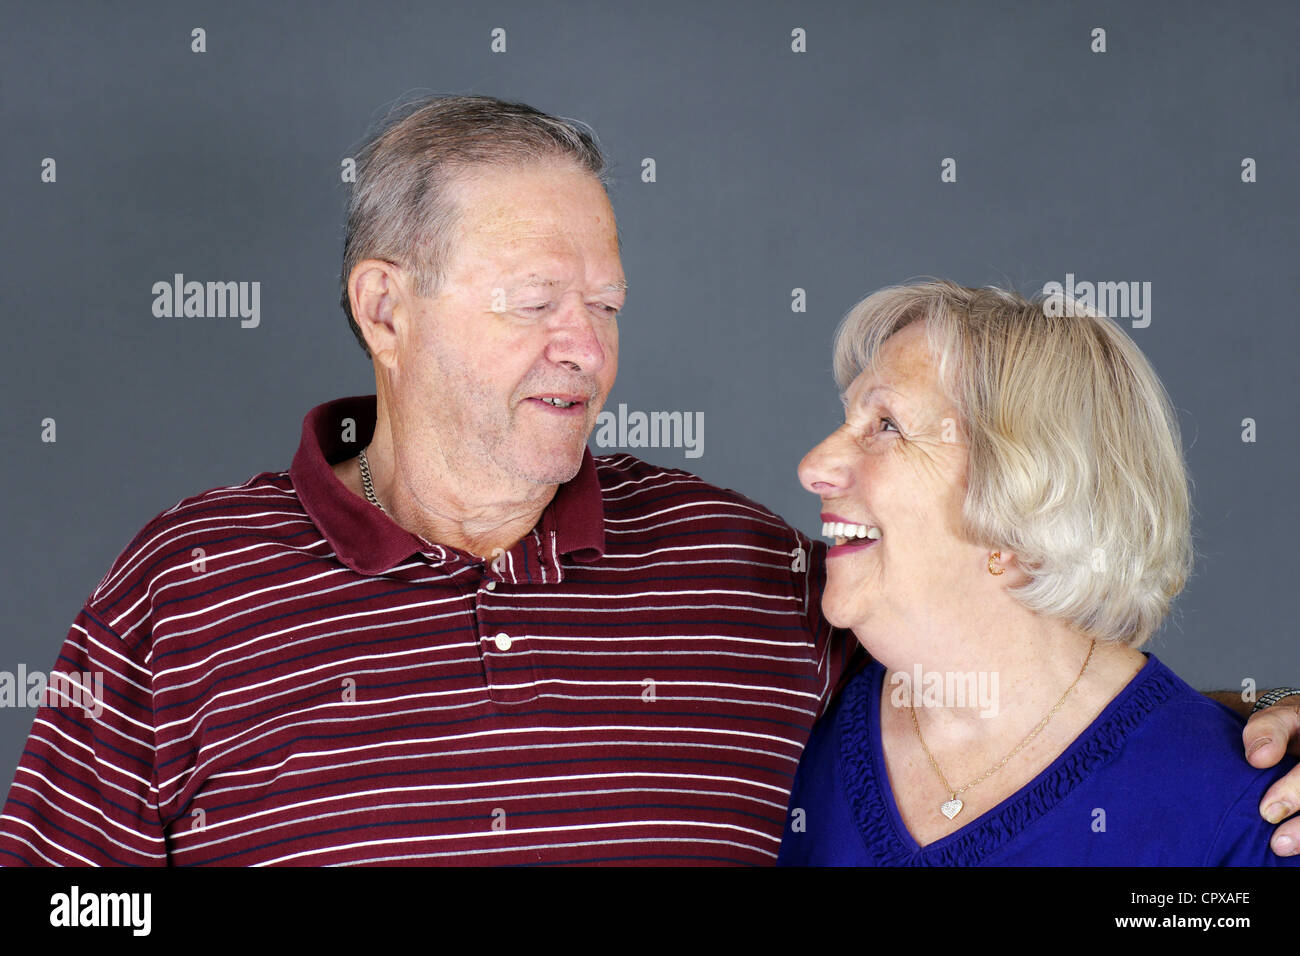 Happy senior couple laughing together, studio shot over grey background. Stock Photo